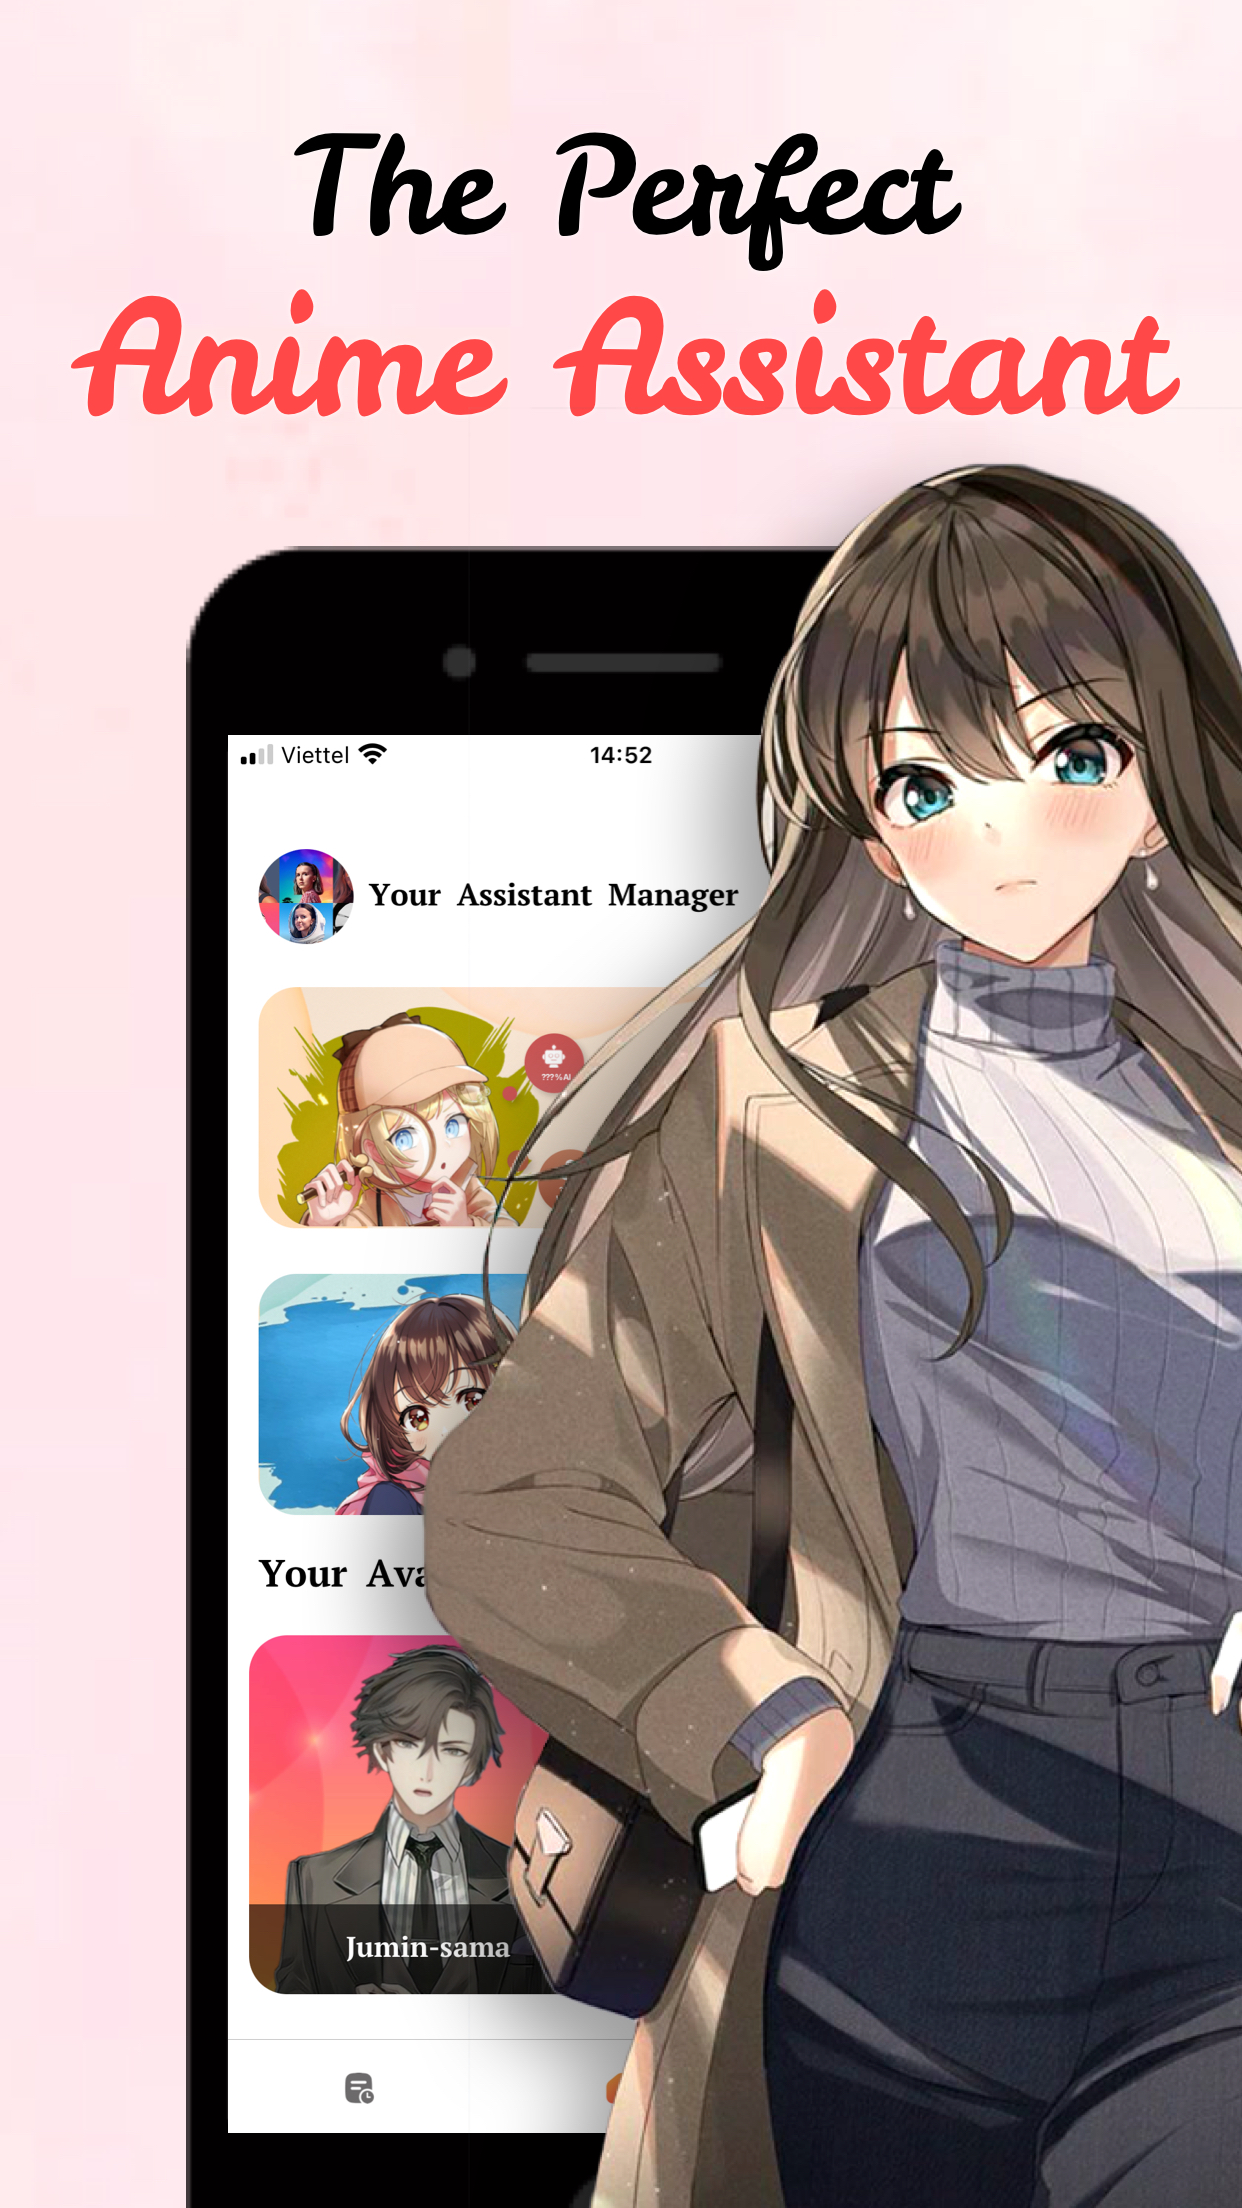 Best Anime Girl Voice Text to Speech Generators in 2023